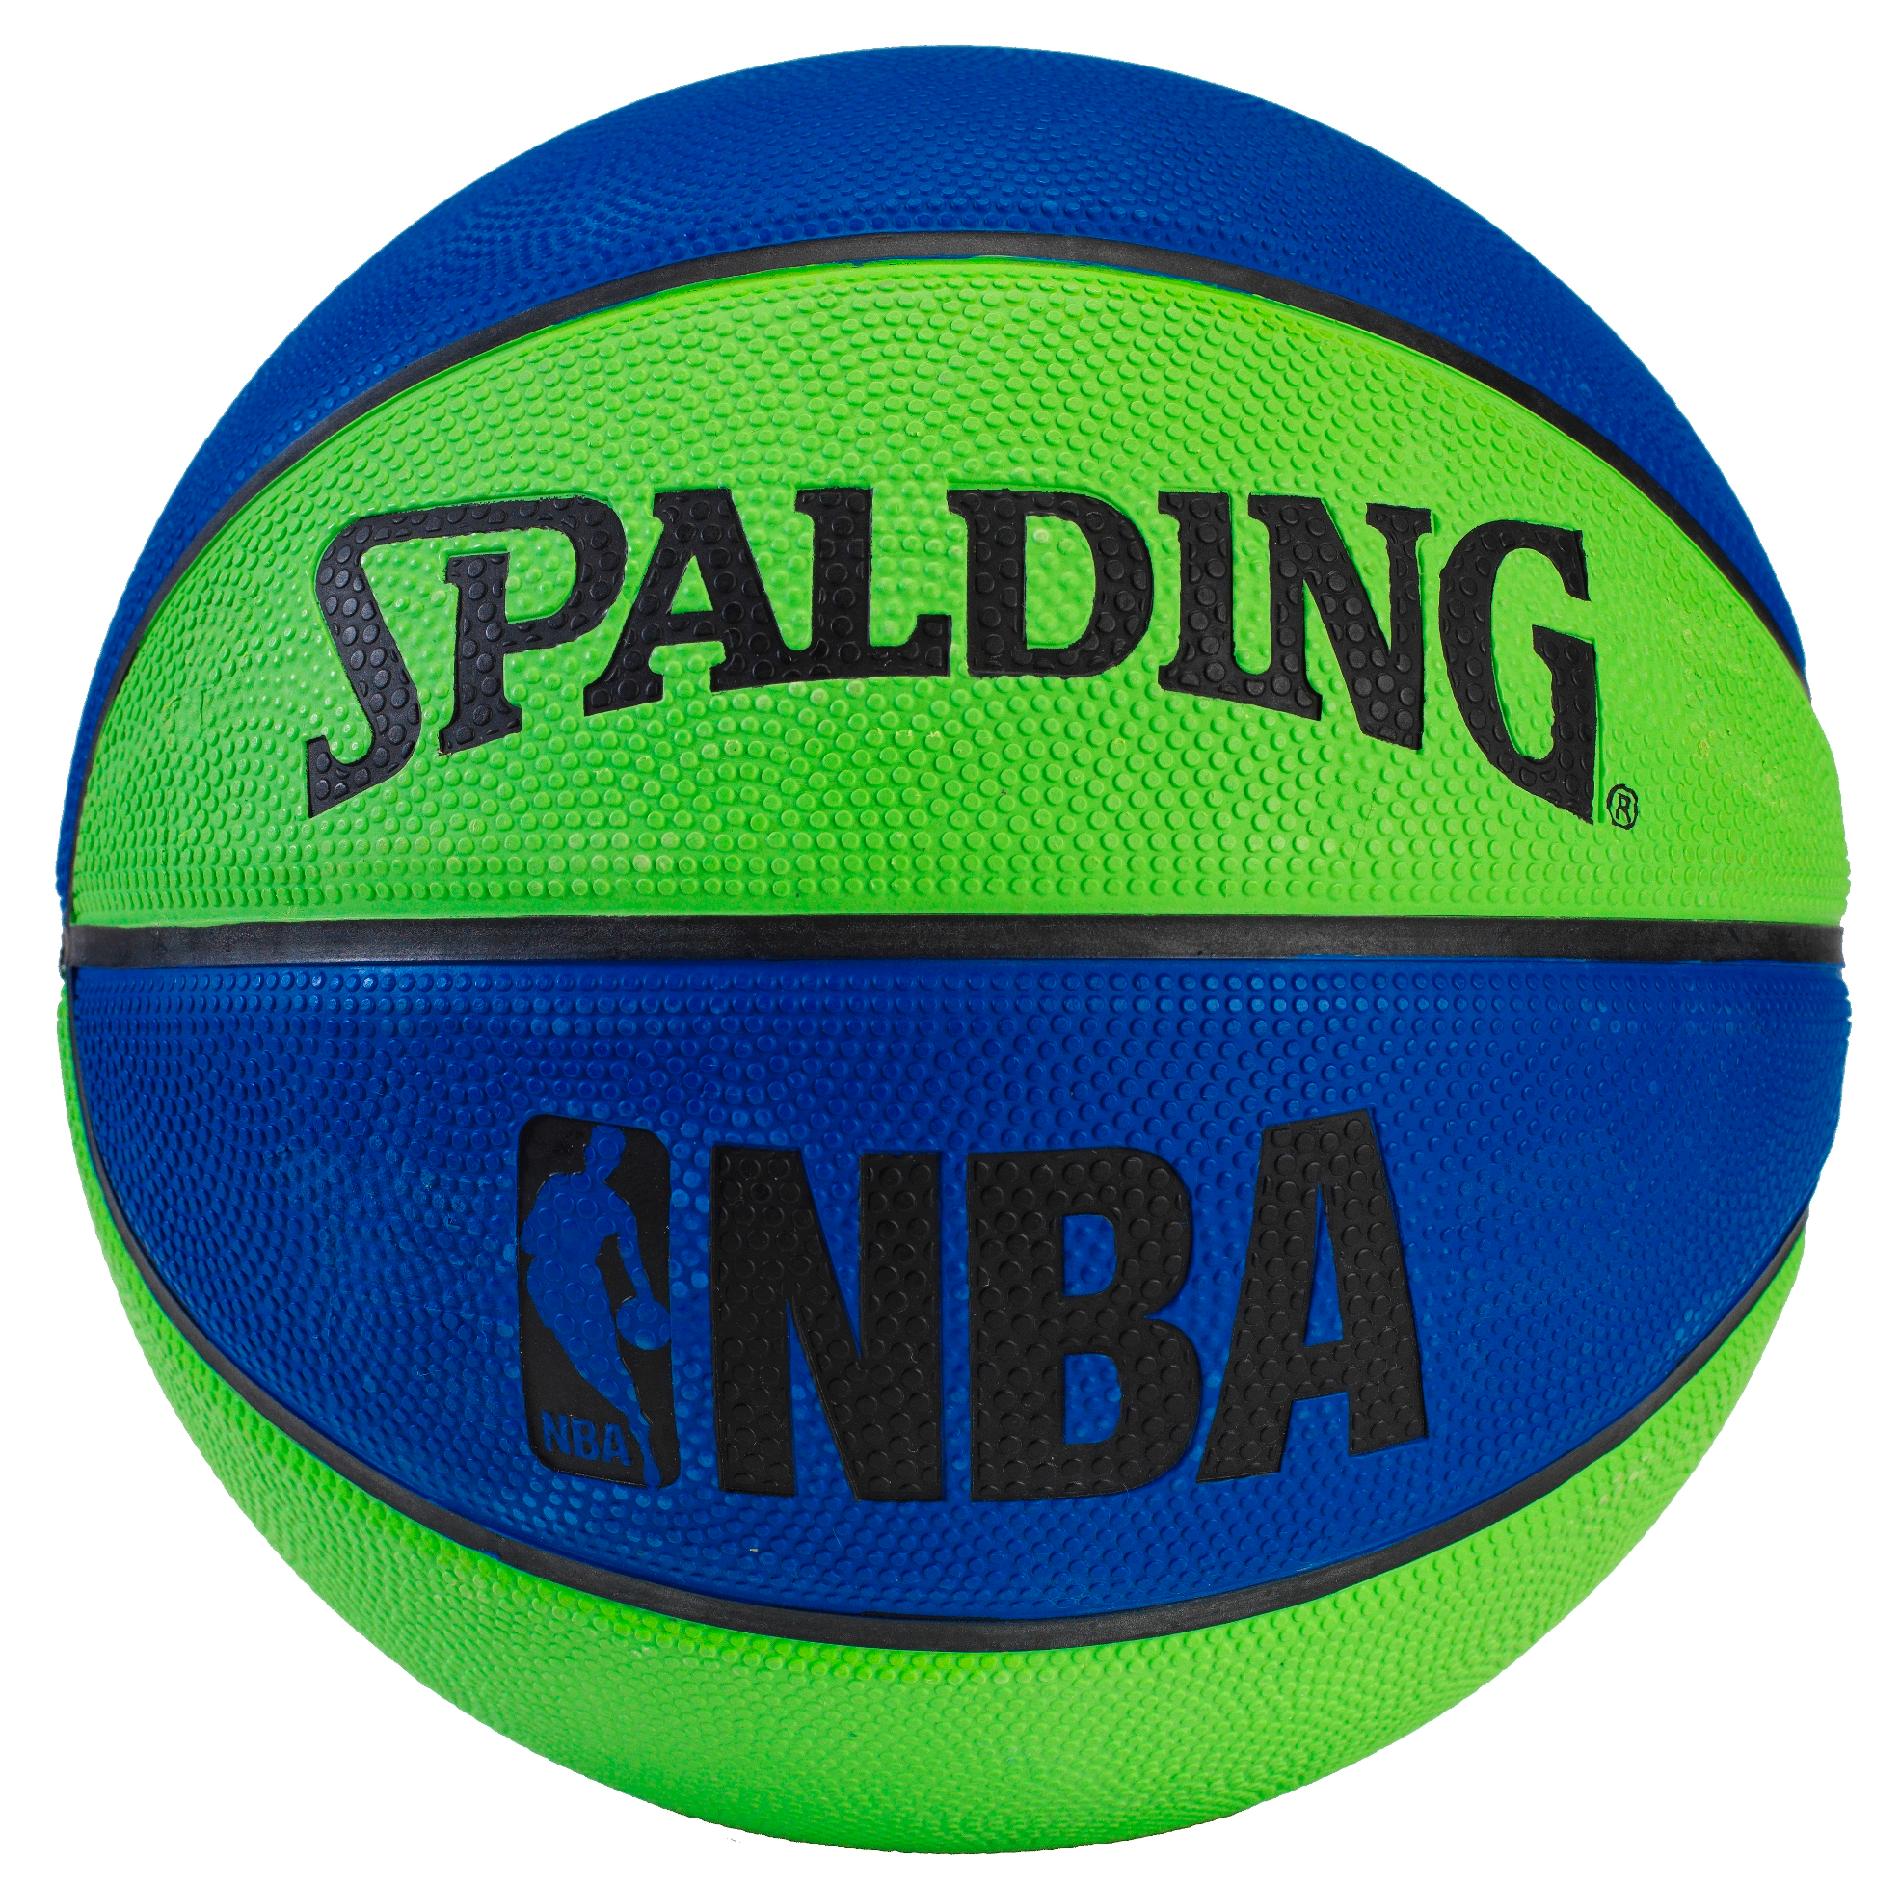 Spalding Mini Basketball - Blue/Green